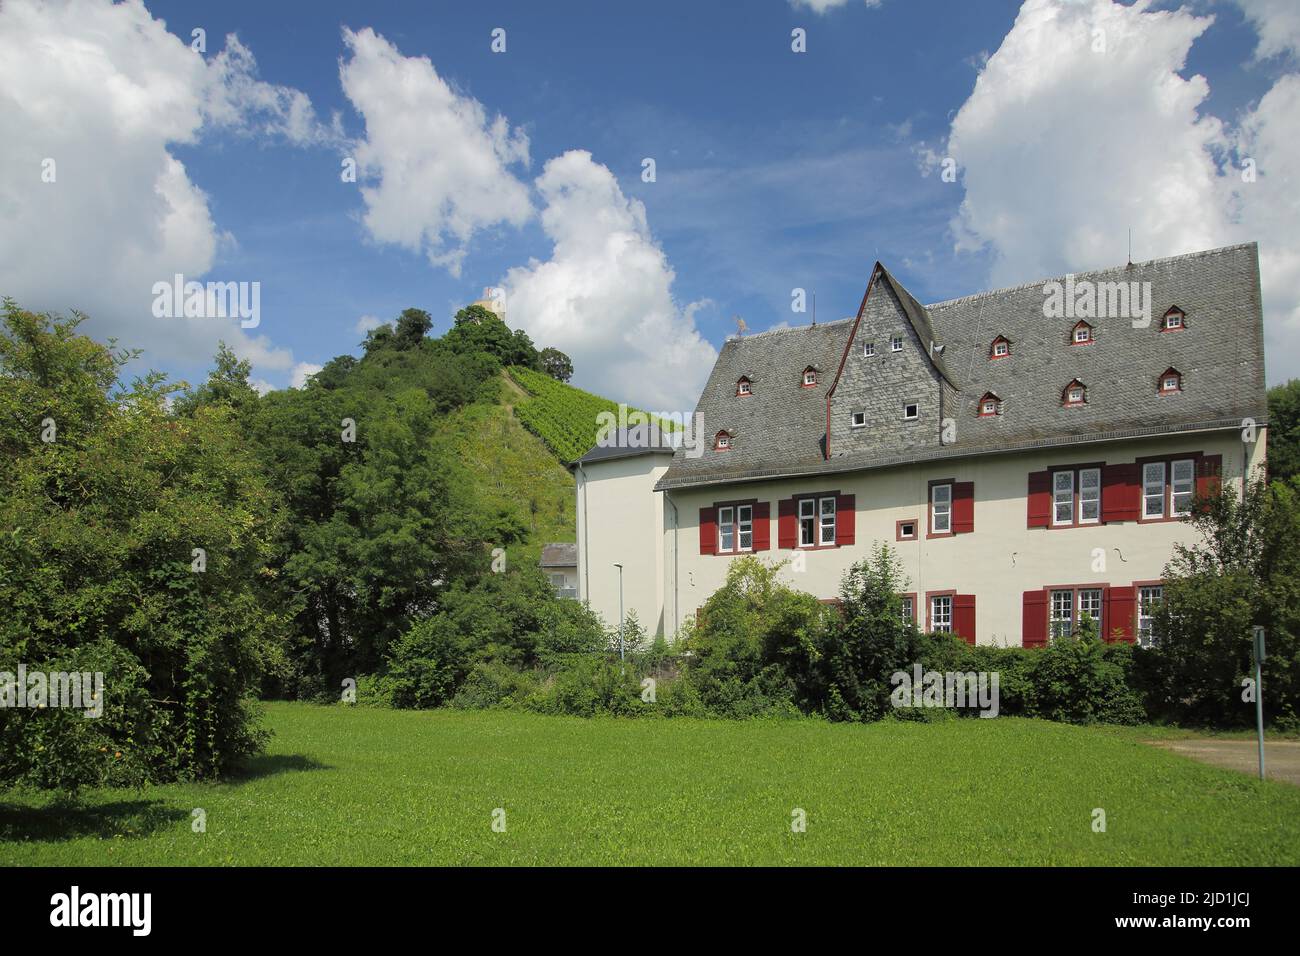 Bassenheimer Hof e il Castello di Scharfenstein a Kiedrich, Rheingau, Taunus, Assia, Germania Foto Stock